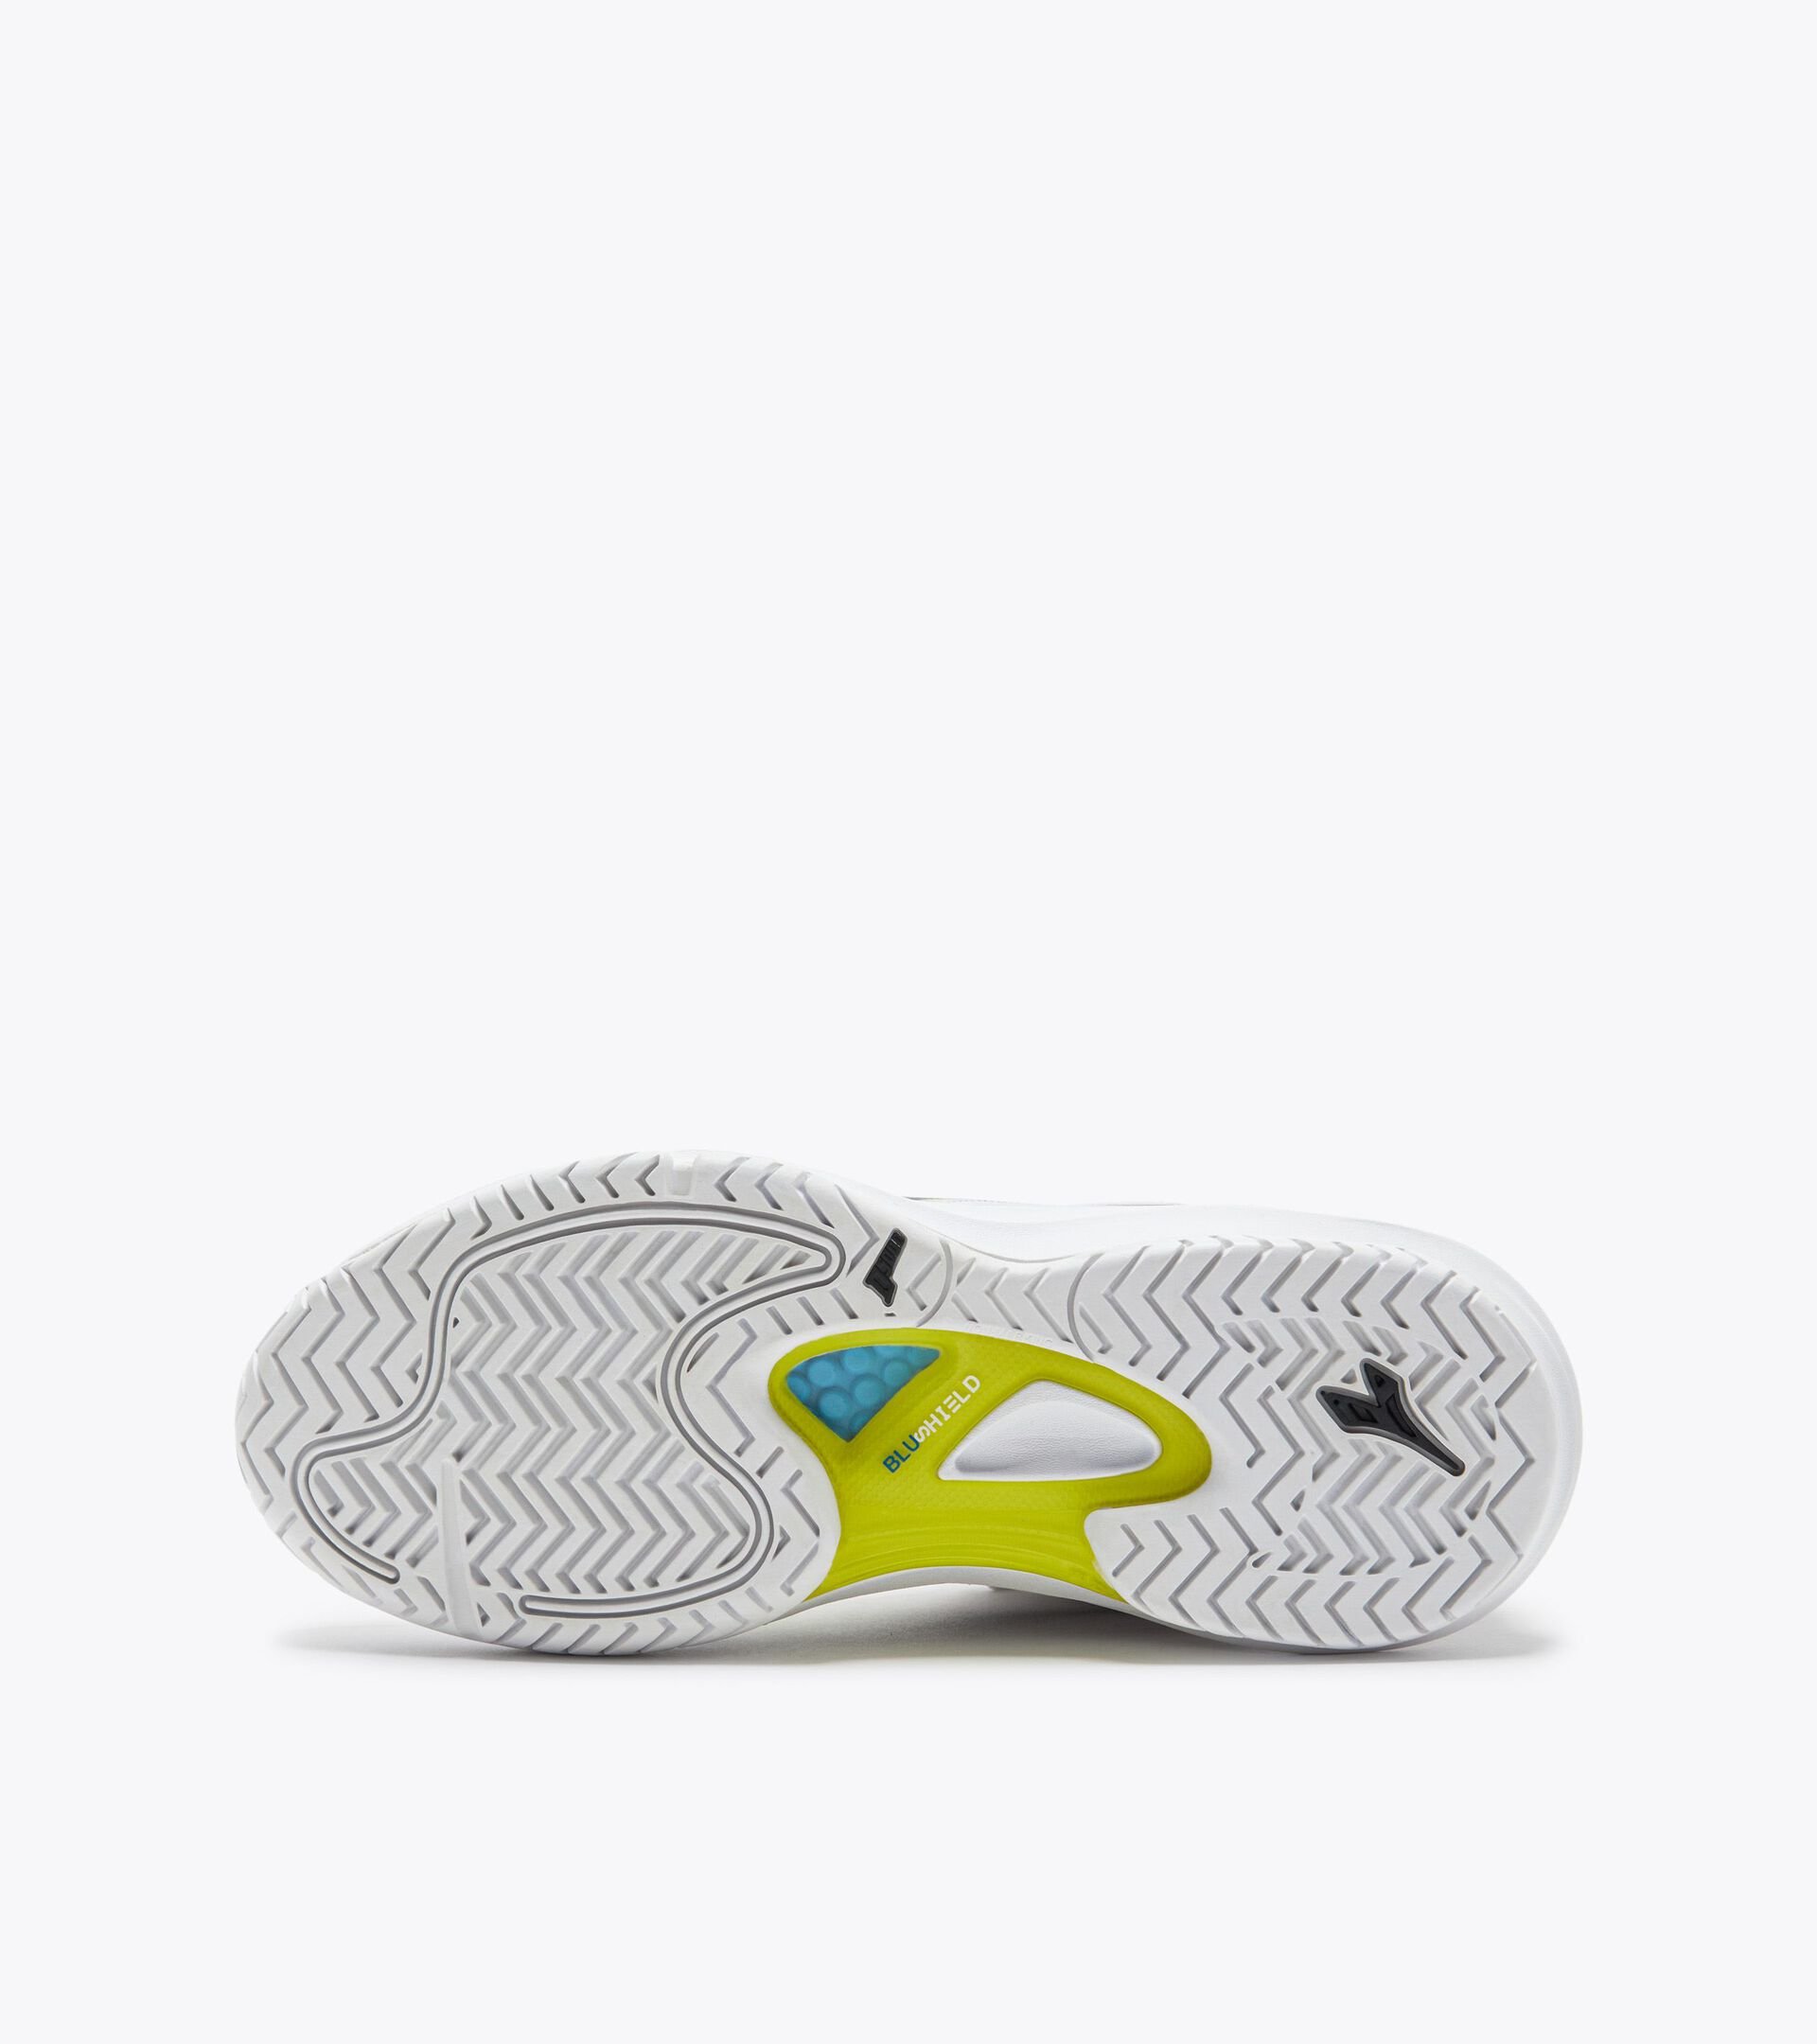 Tennis shoes for hard surfaces or clay - Women SPEED BLUSHIELD FLY 4 + W AG WHITE/BLACK/VIVACIOUS - Diadora